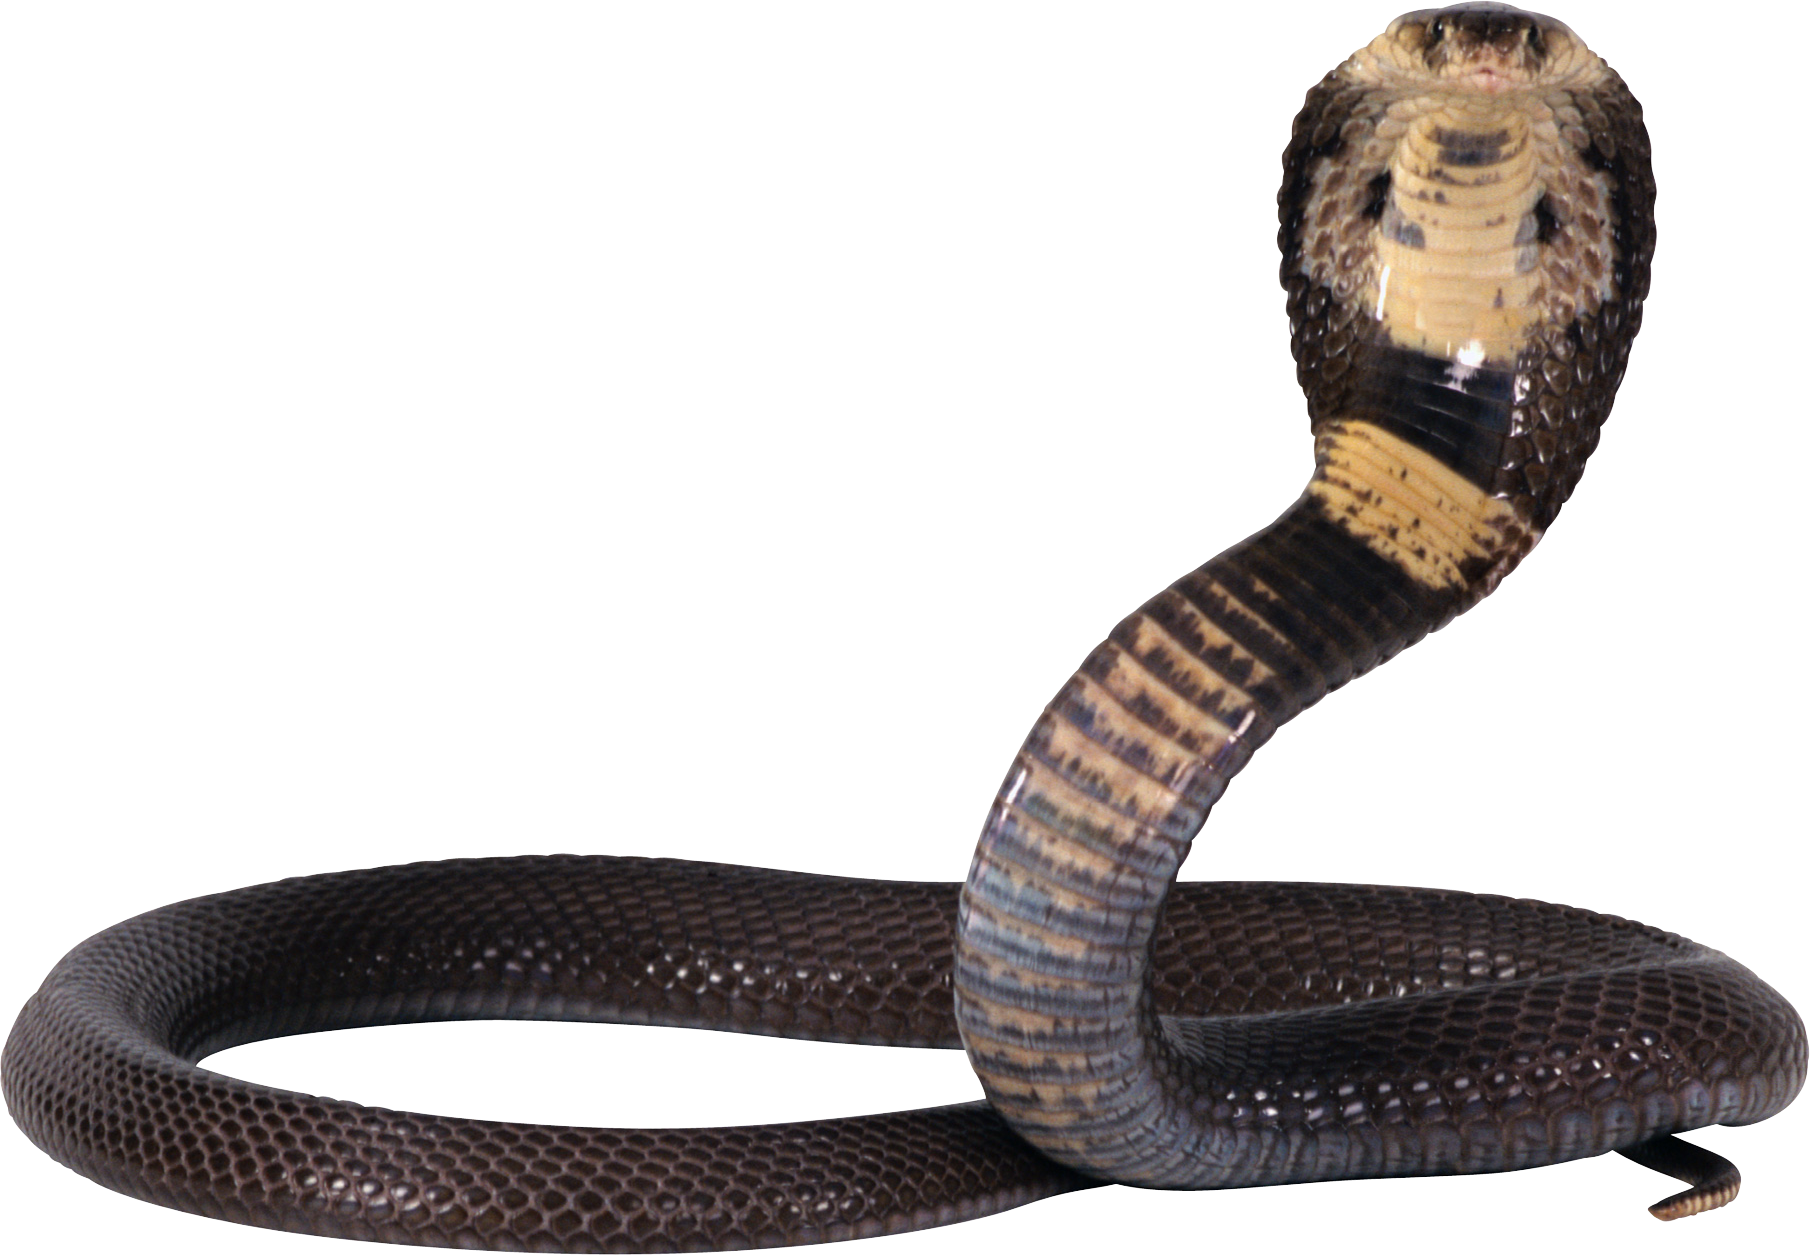 Cobra Snake PNG HD - 136738